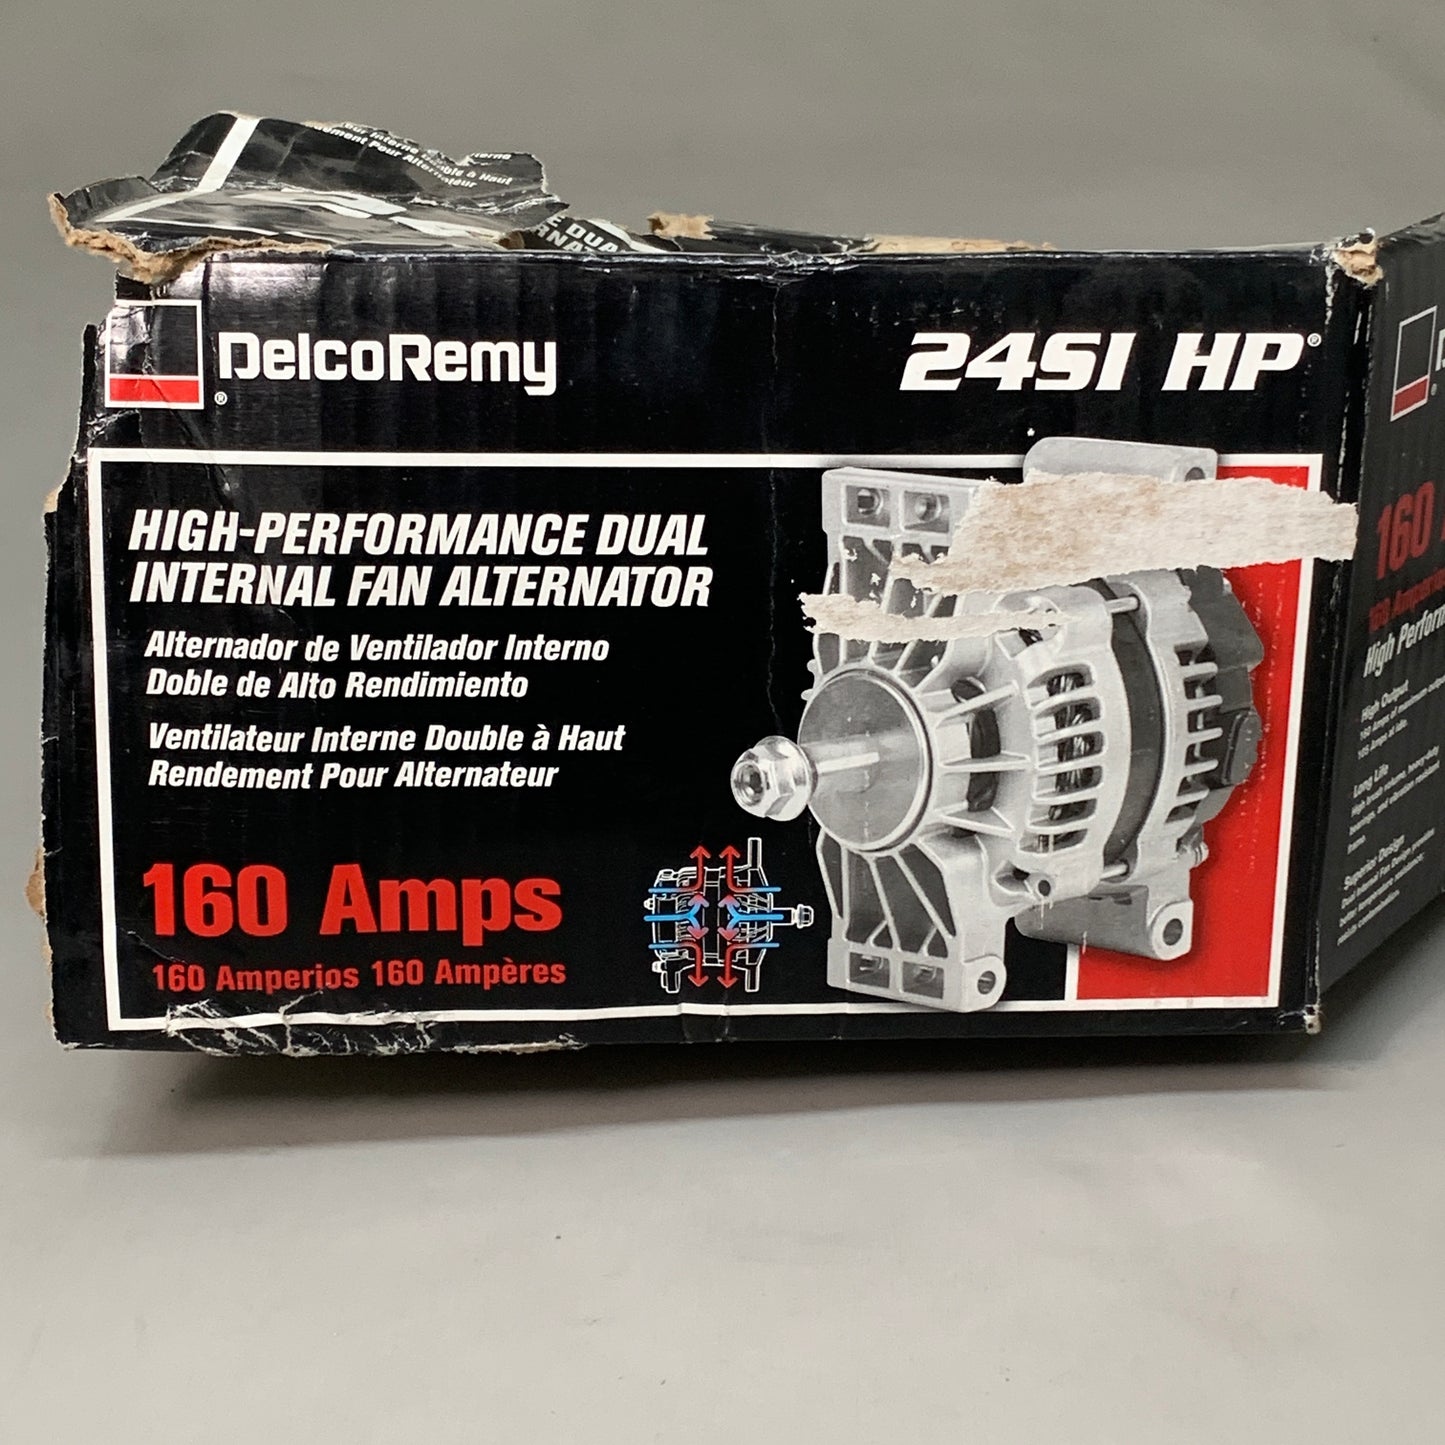 DELCO REMY High-Performance Dual Internal Fan Alternator 12V 160A 24SI HP 8600889